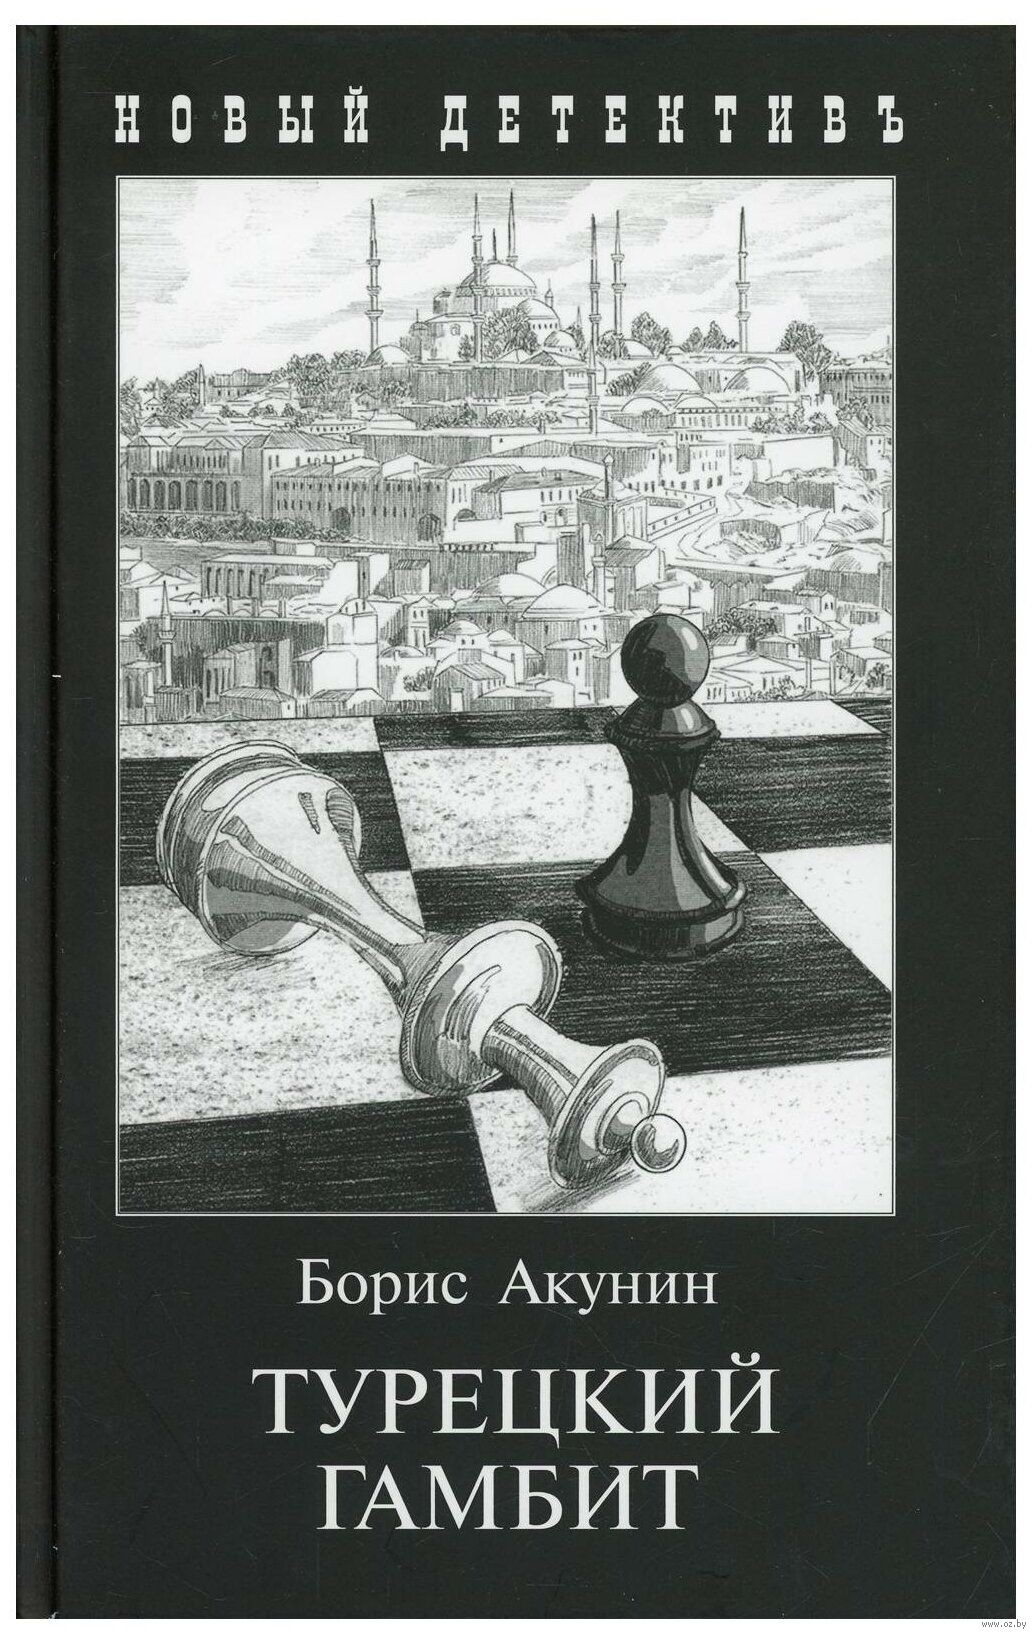 Книга бориса акунина турецкий гамбит